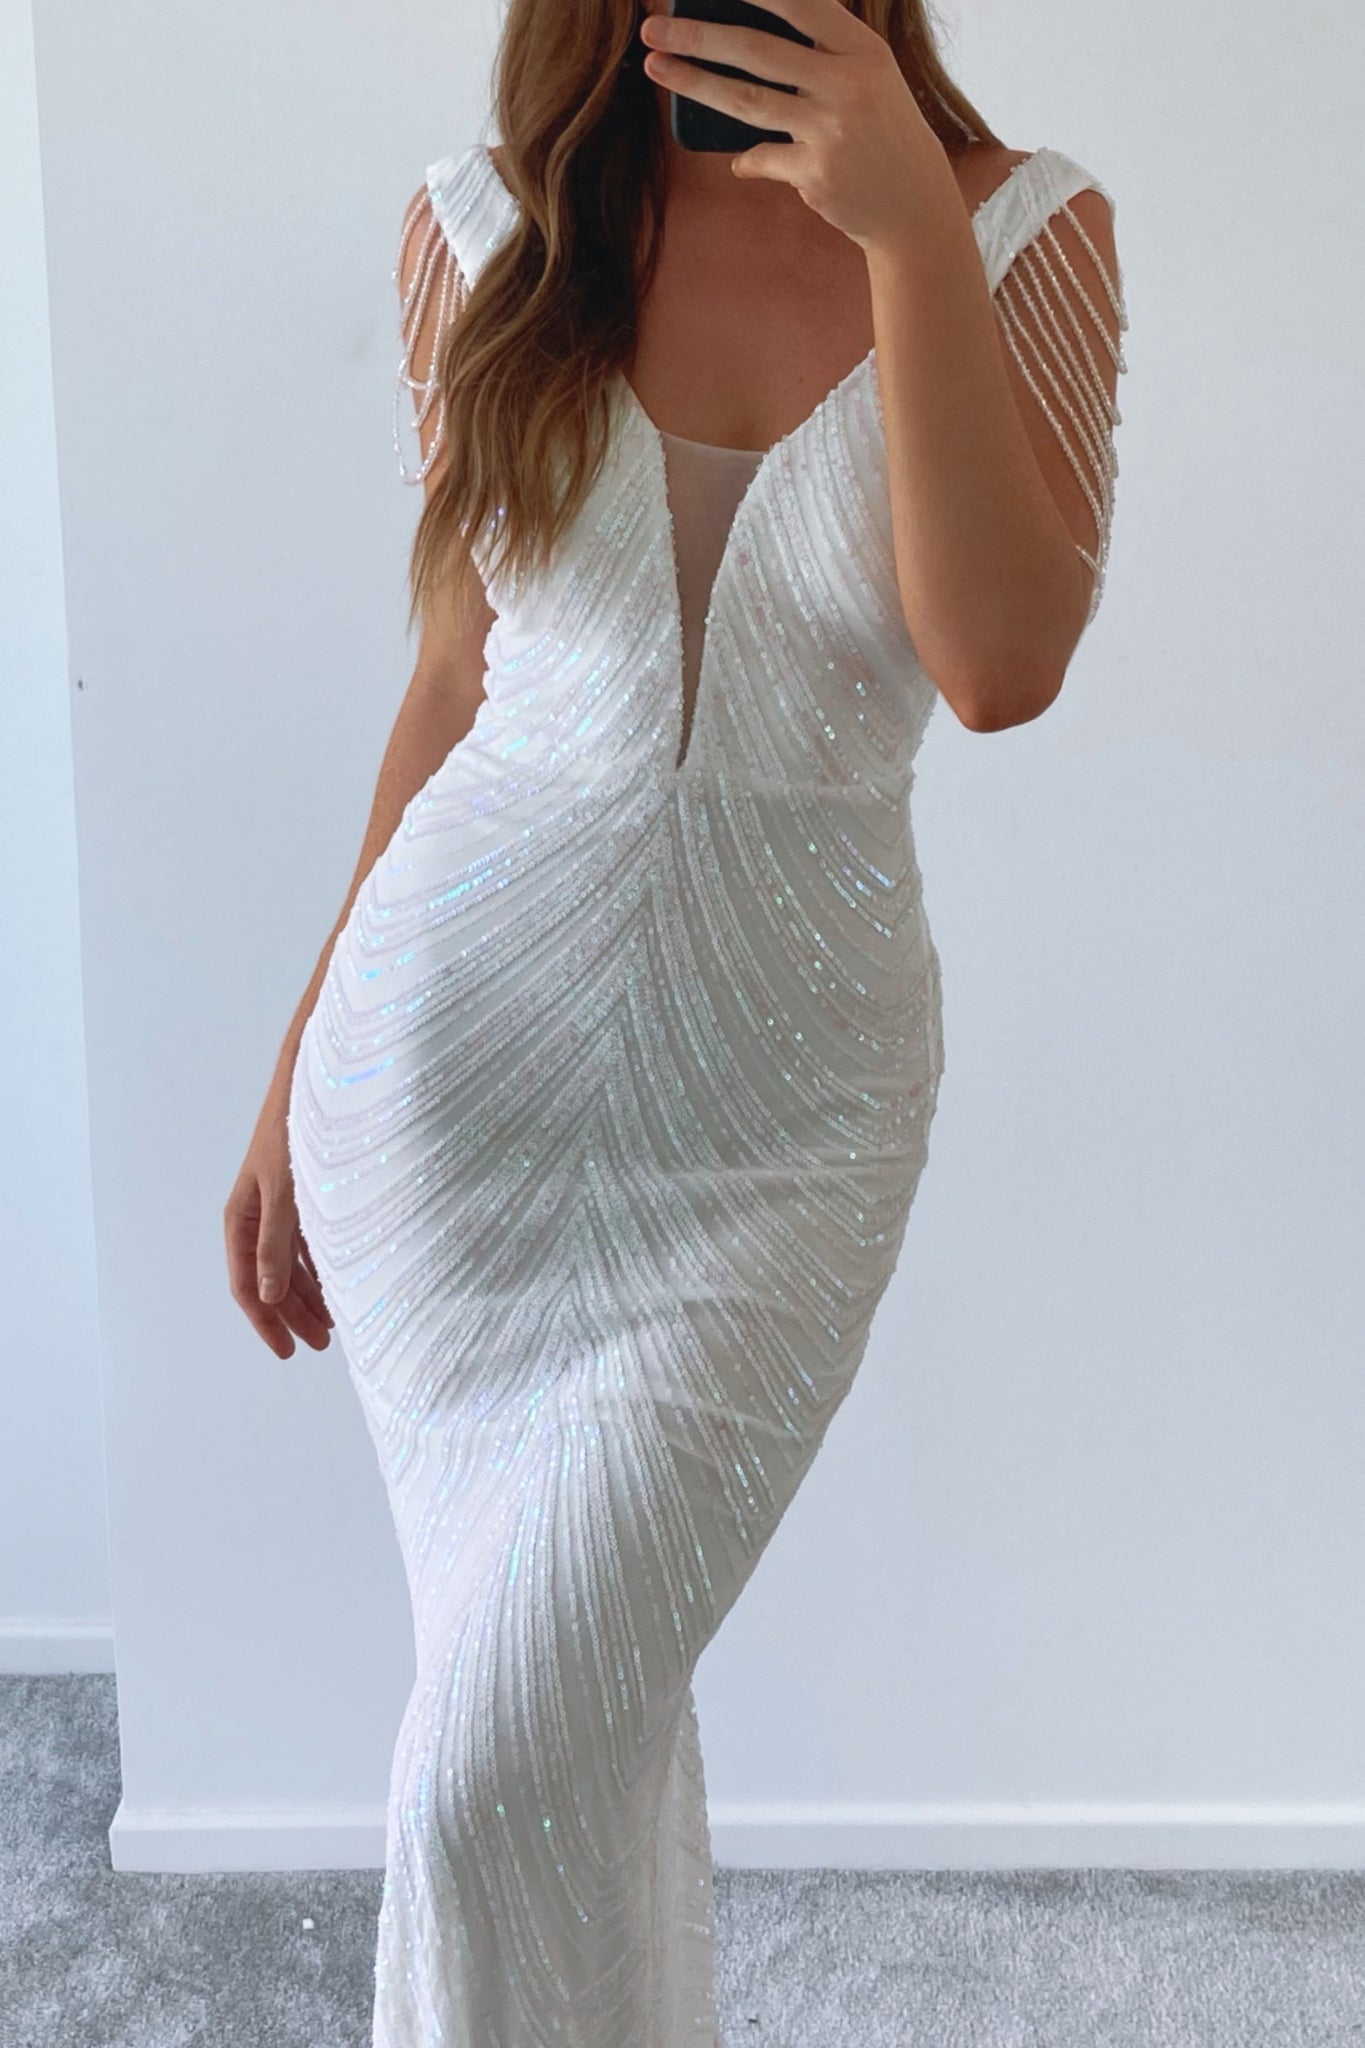 Valencia Sequin Gown - White